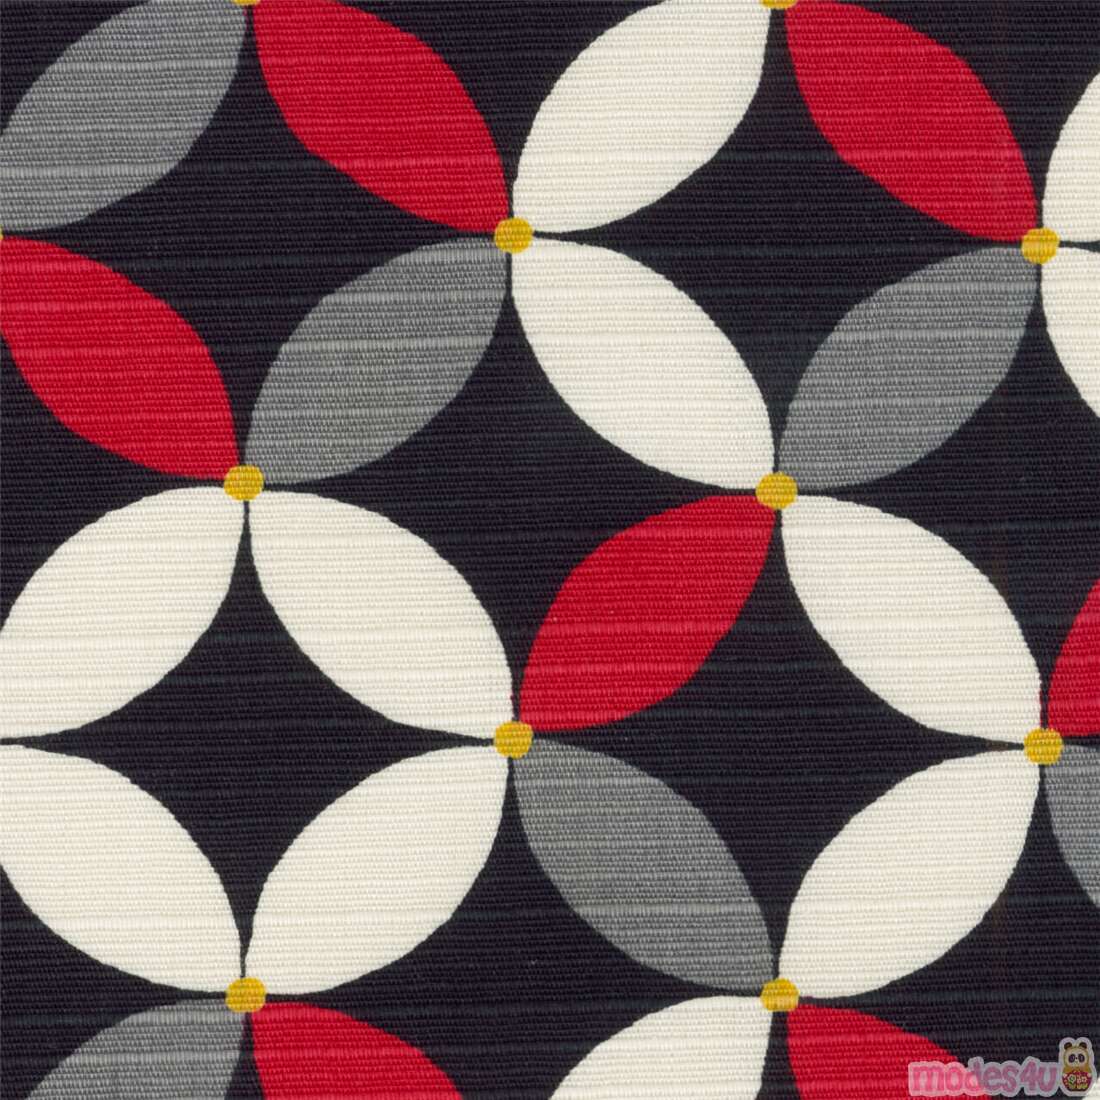 Geometric Circle Textured Cotton Fabric By Robert Kaufman Modes4u